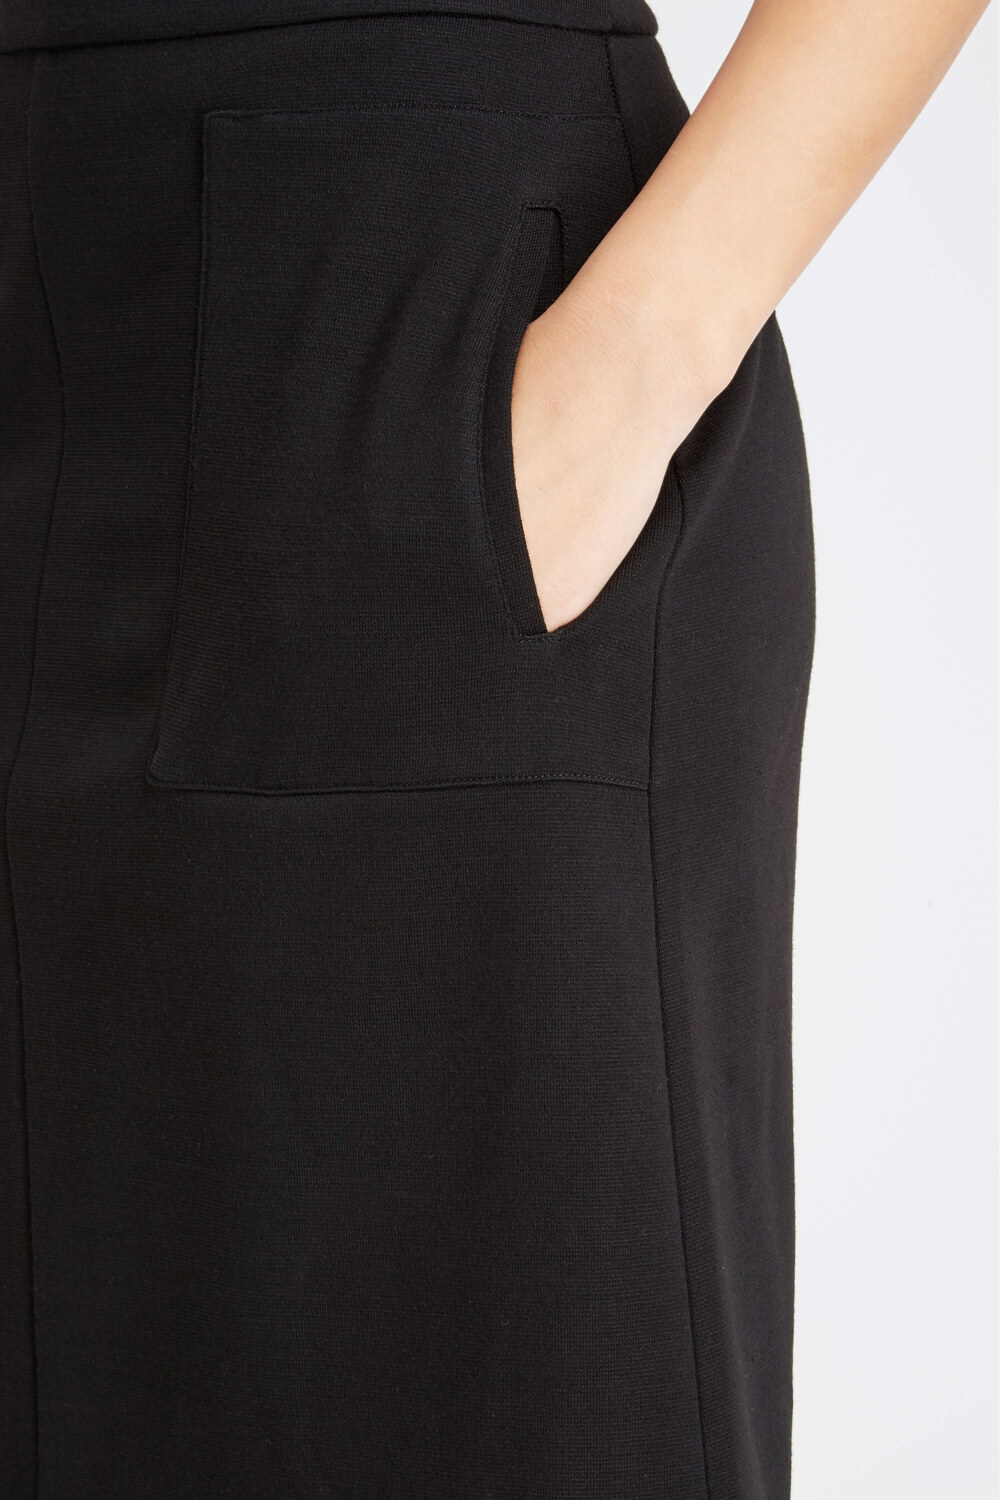 Black Textured Ponte Skirt, Image 4 of 5